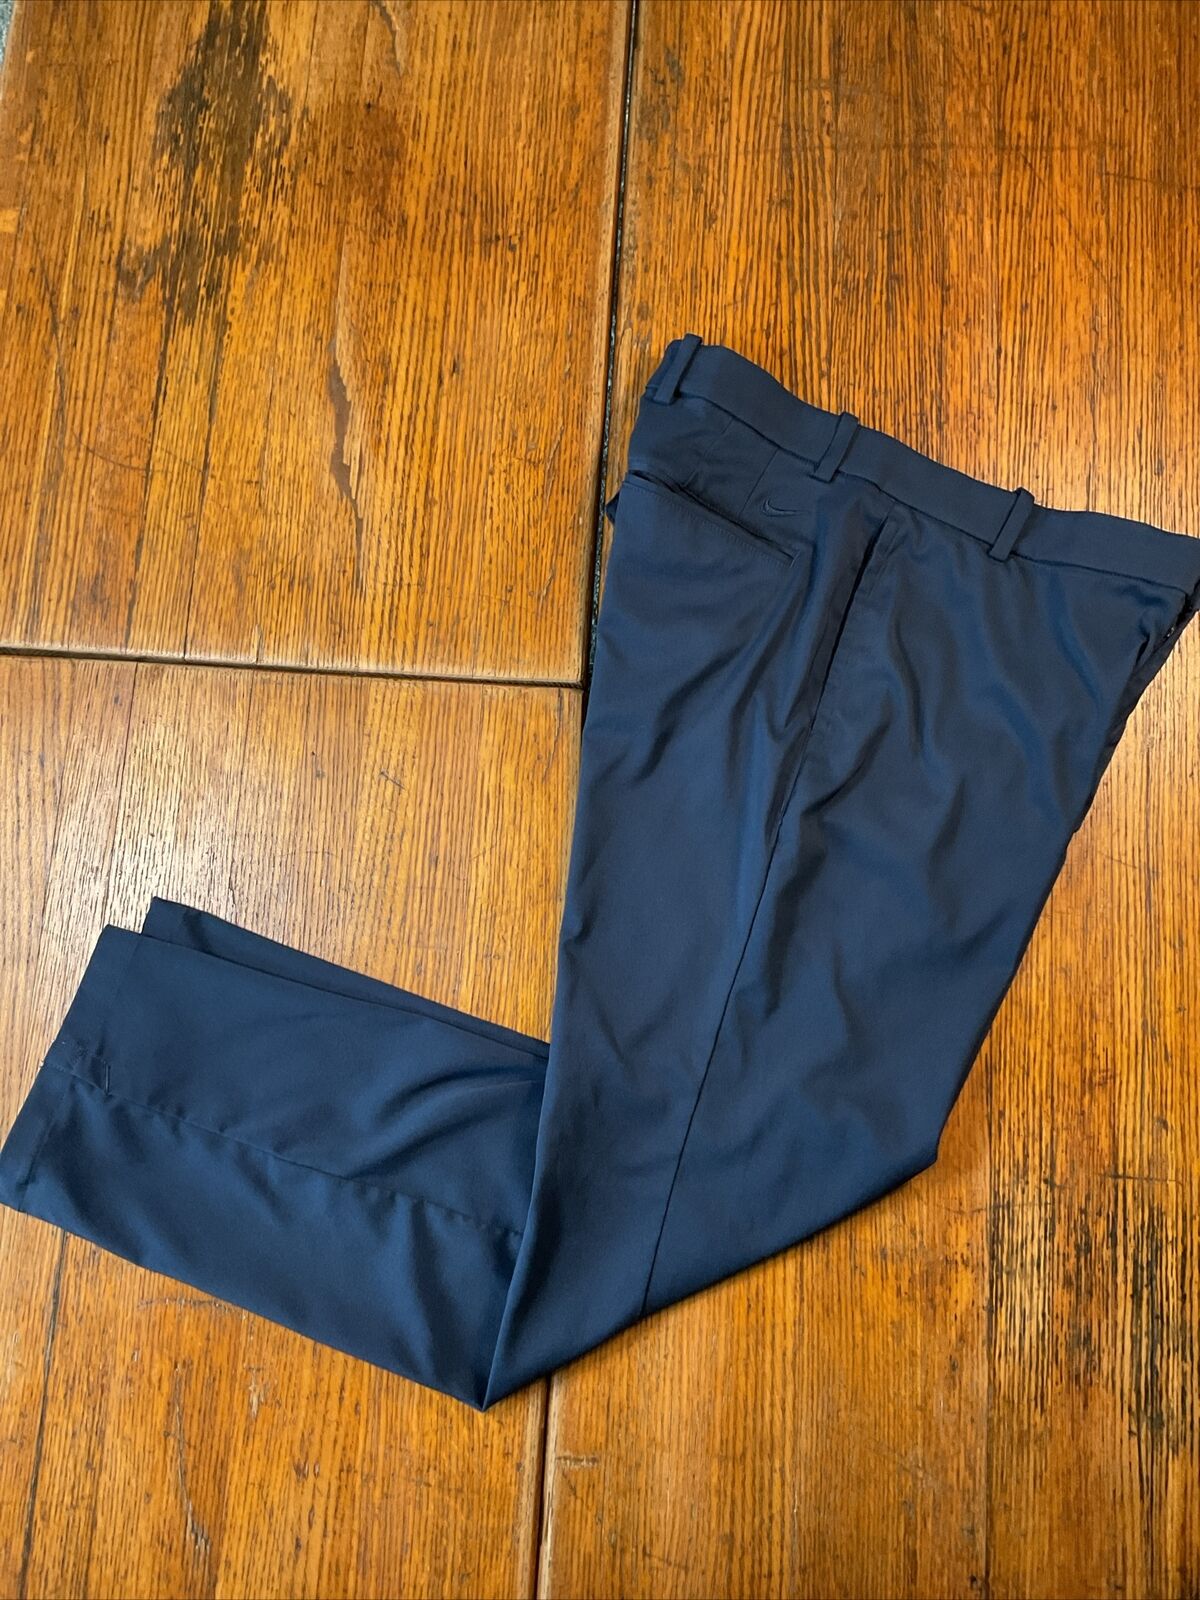 Nike Dri-Fit Victory Golf Pants BLUE Size 32 X 30 W Pockets